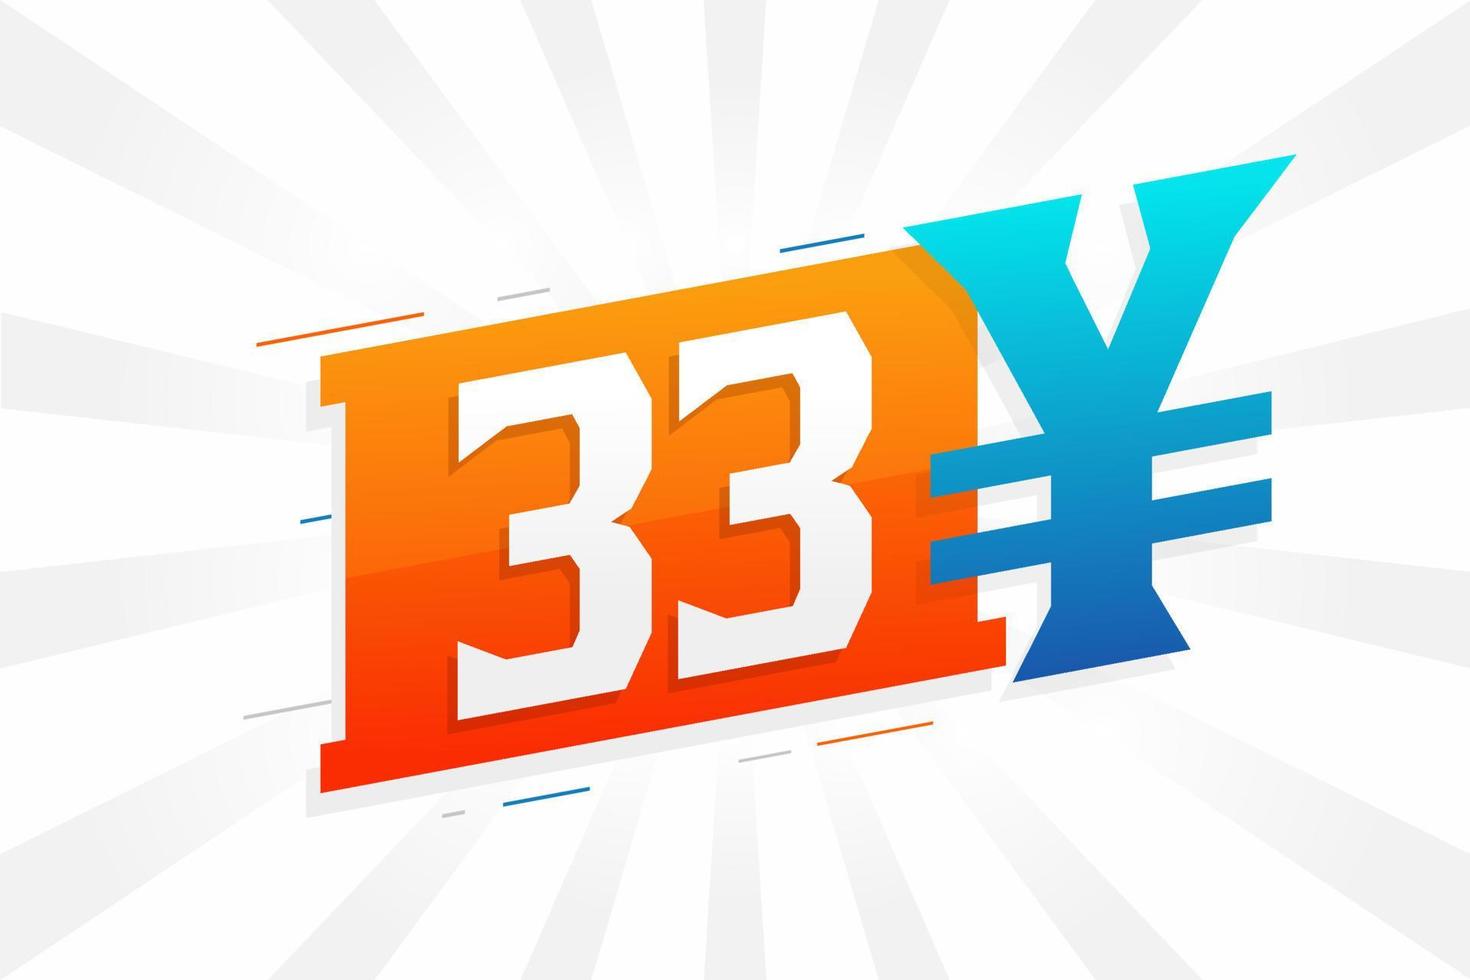 33 yuan Cinese moneta vettore testo simbolo. 33 yen giapponese moneta i soldi azione vettore